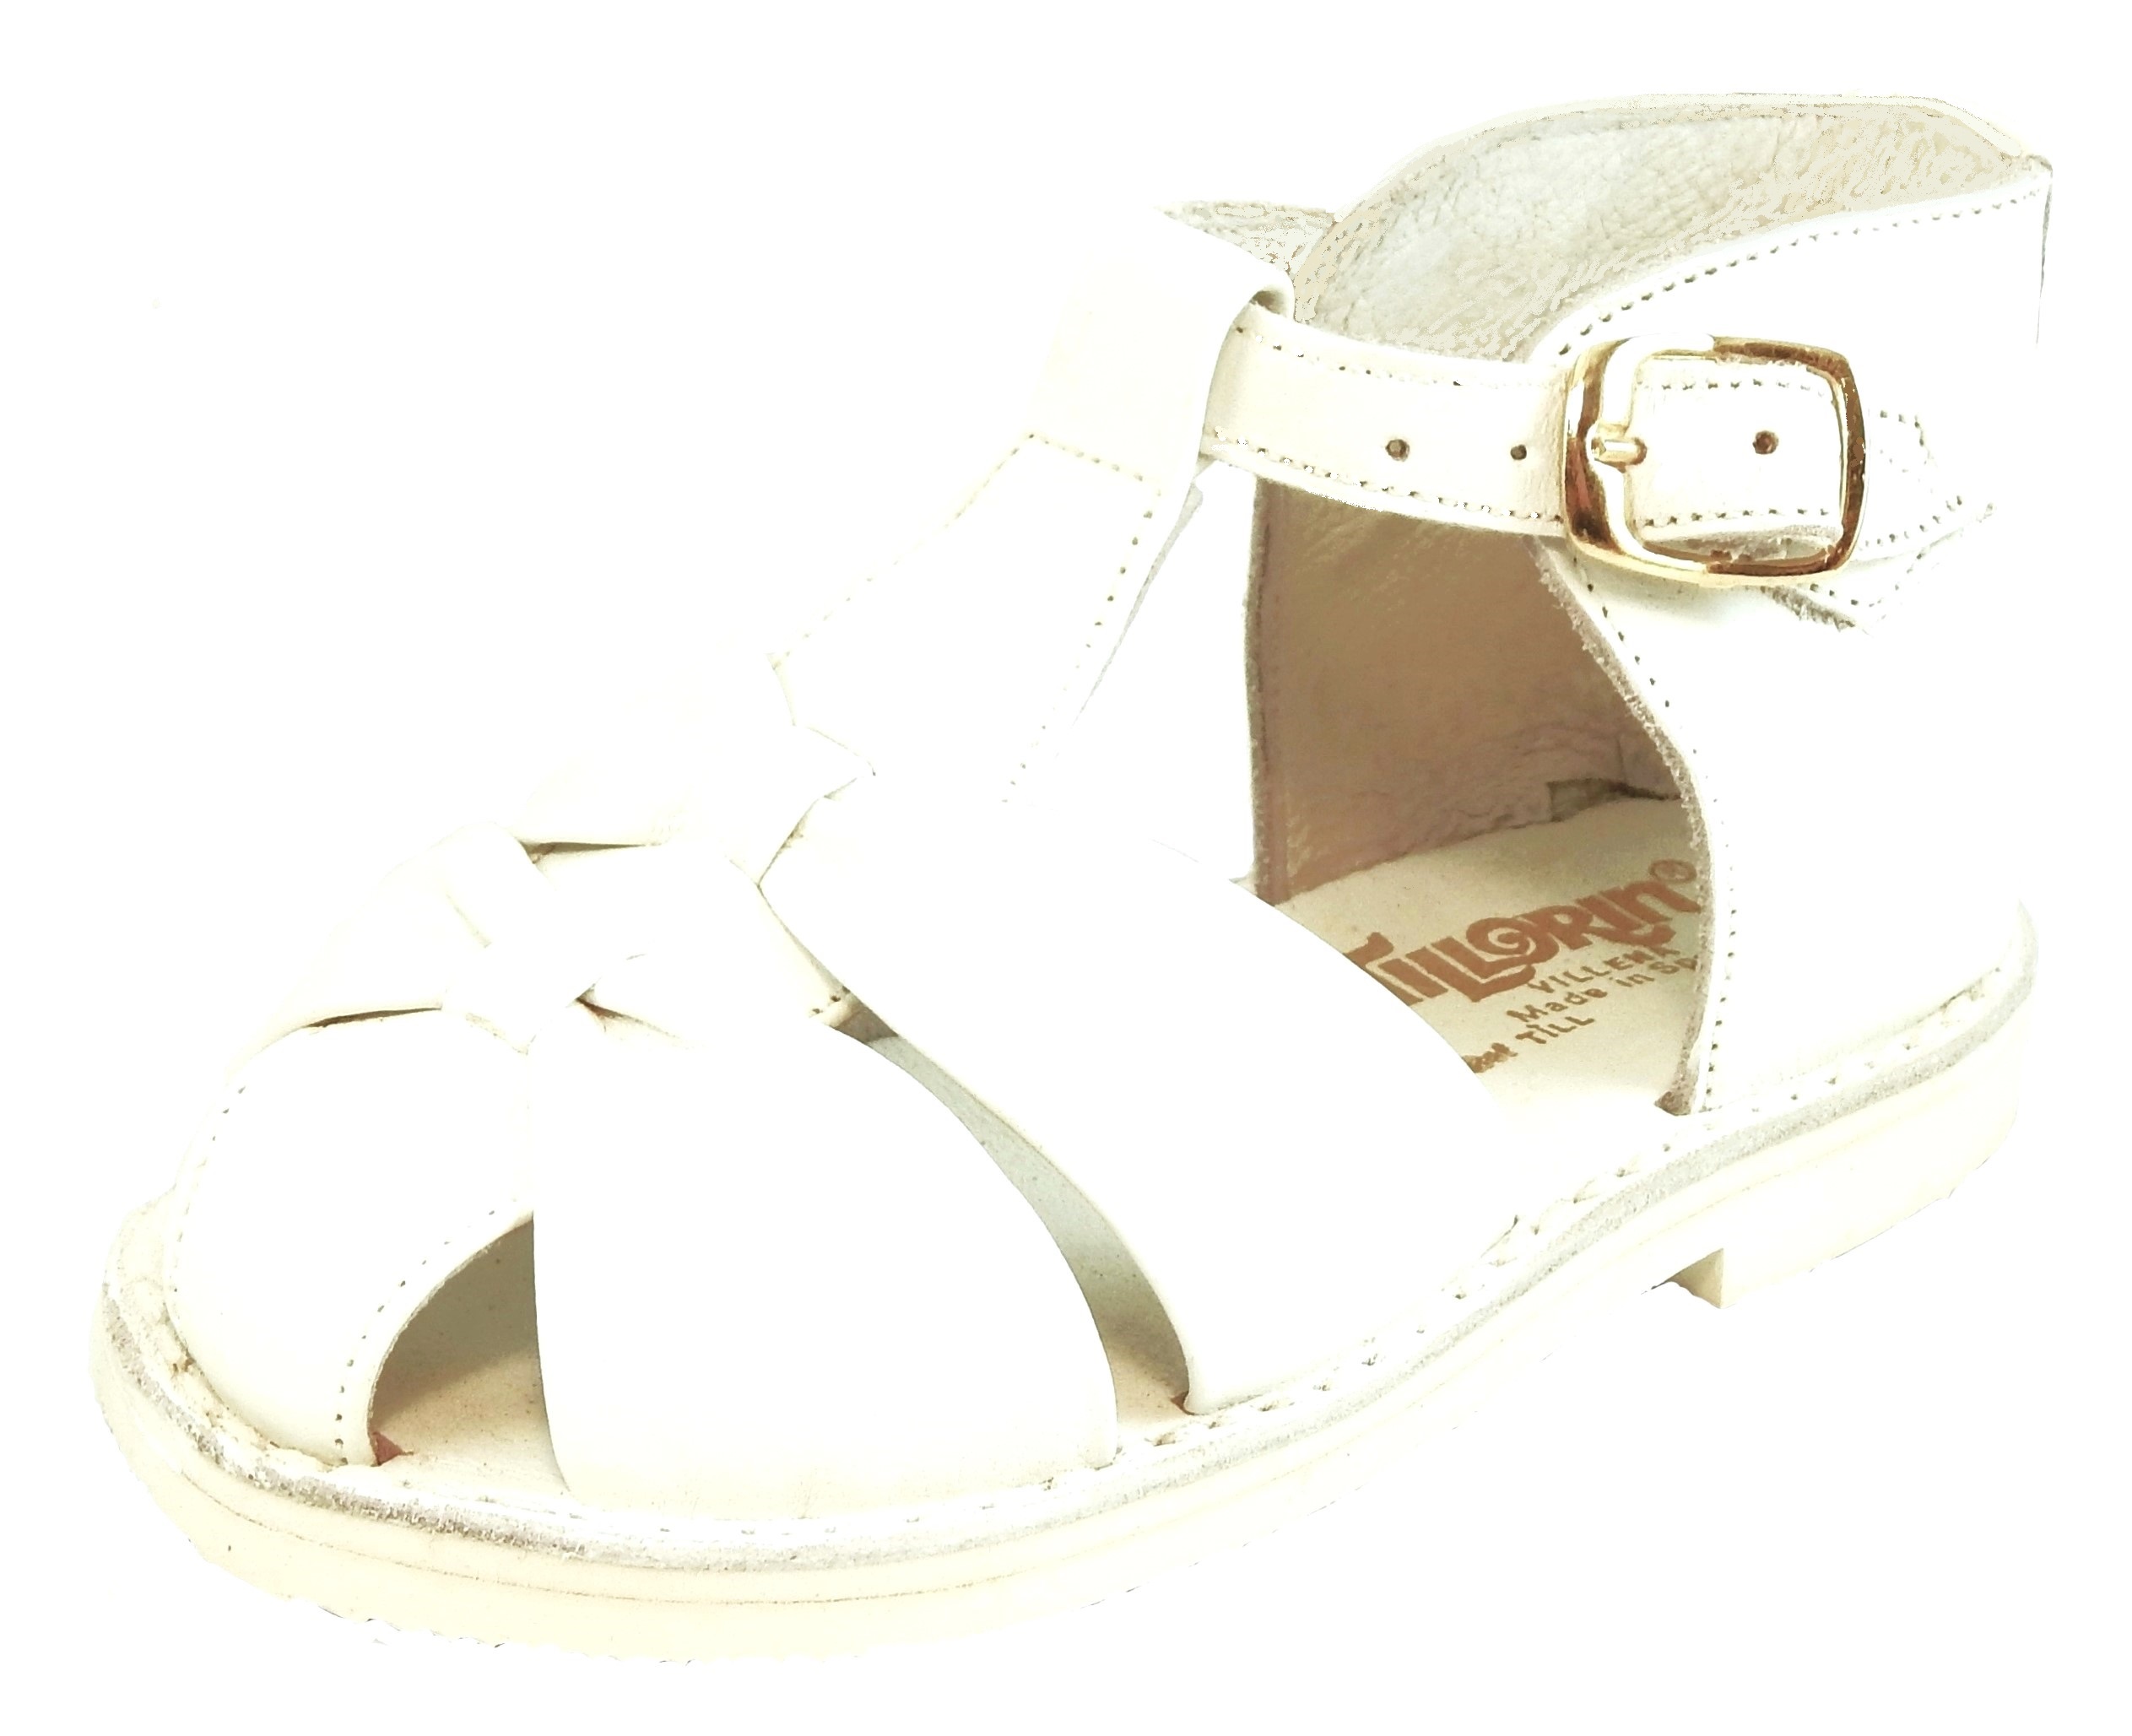 DE OSU/FARO F-3243 Sz 13-5 Girls' Euro White Leather Slingback Dress Sandals 